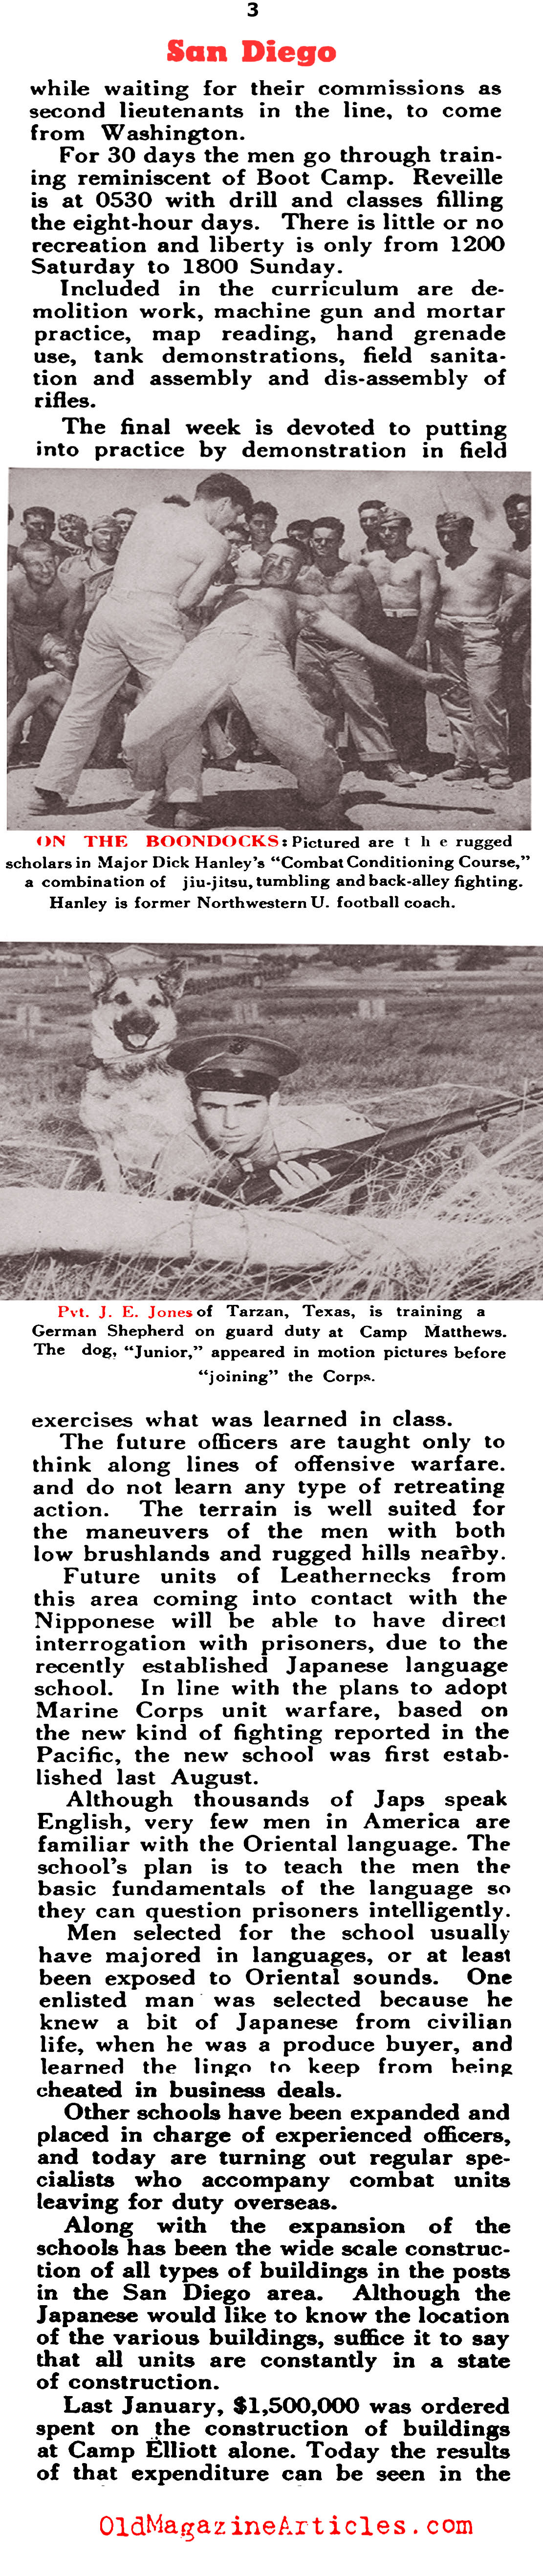 Training Marines in San Diego (Leatherneck Magazine, 1943)